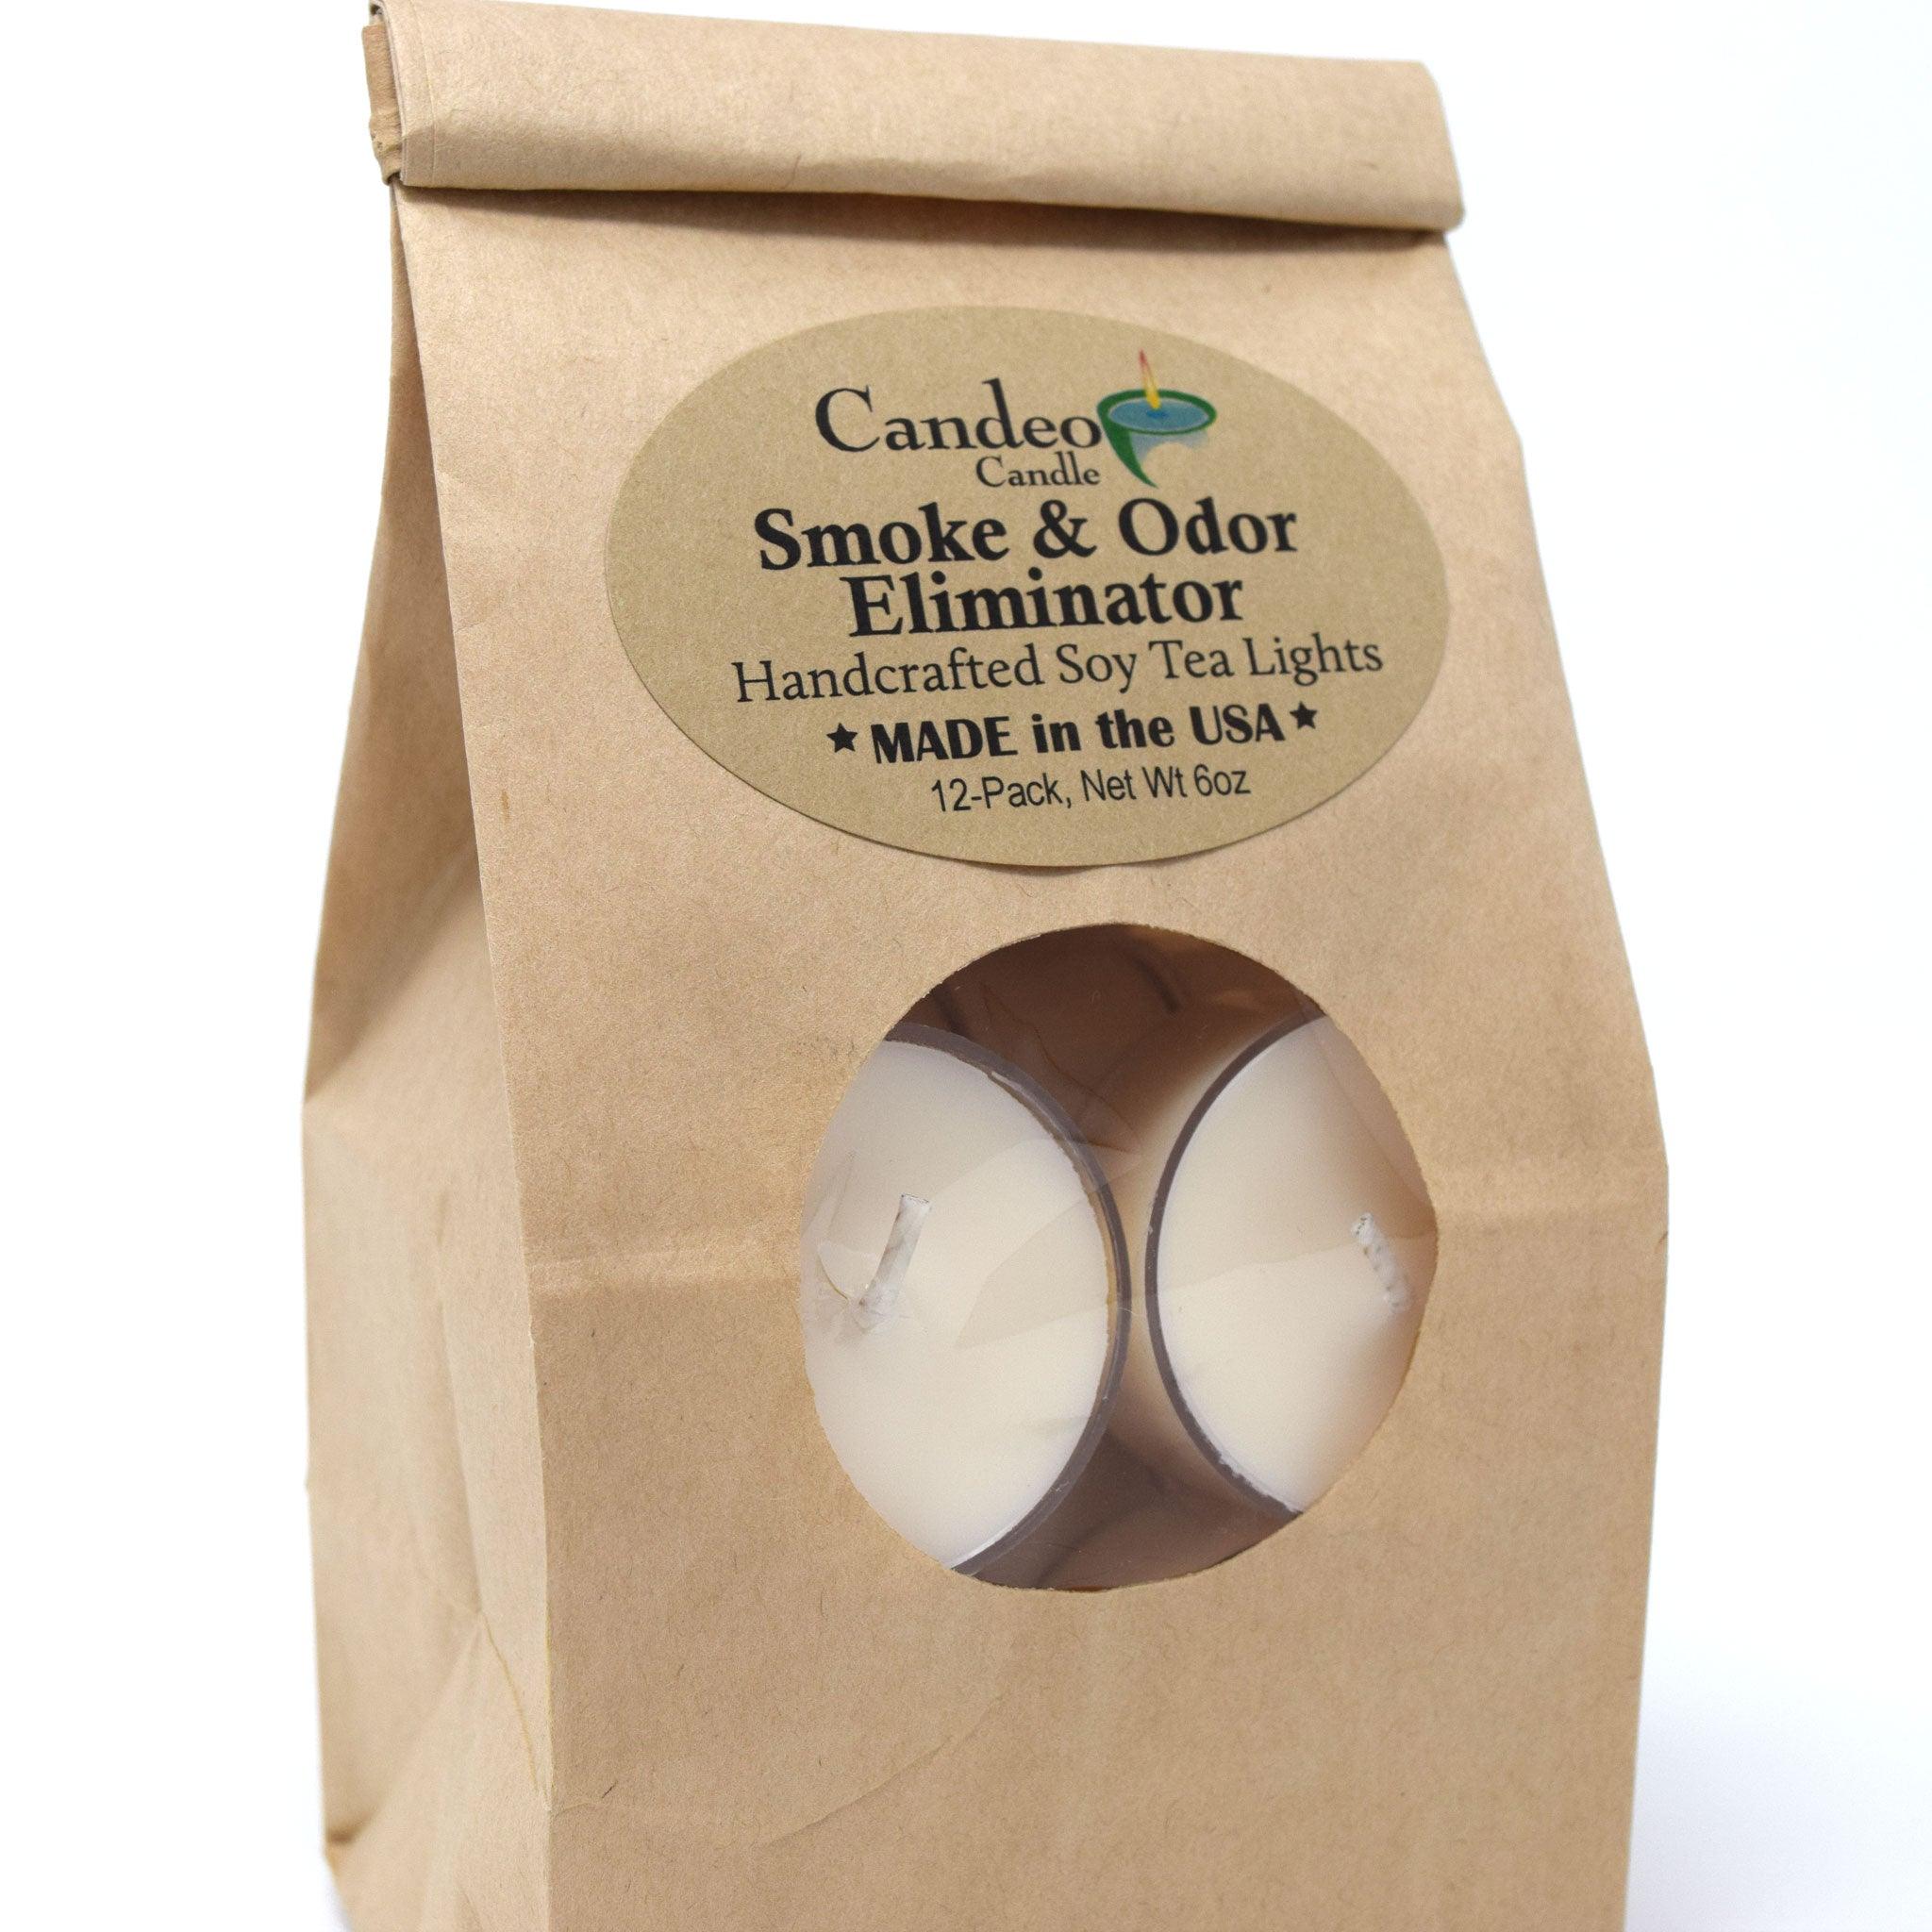 Smoke & Odor Eliminator, Soy Tea Light 12-Pack - Candeo Candle